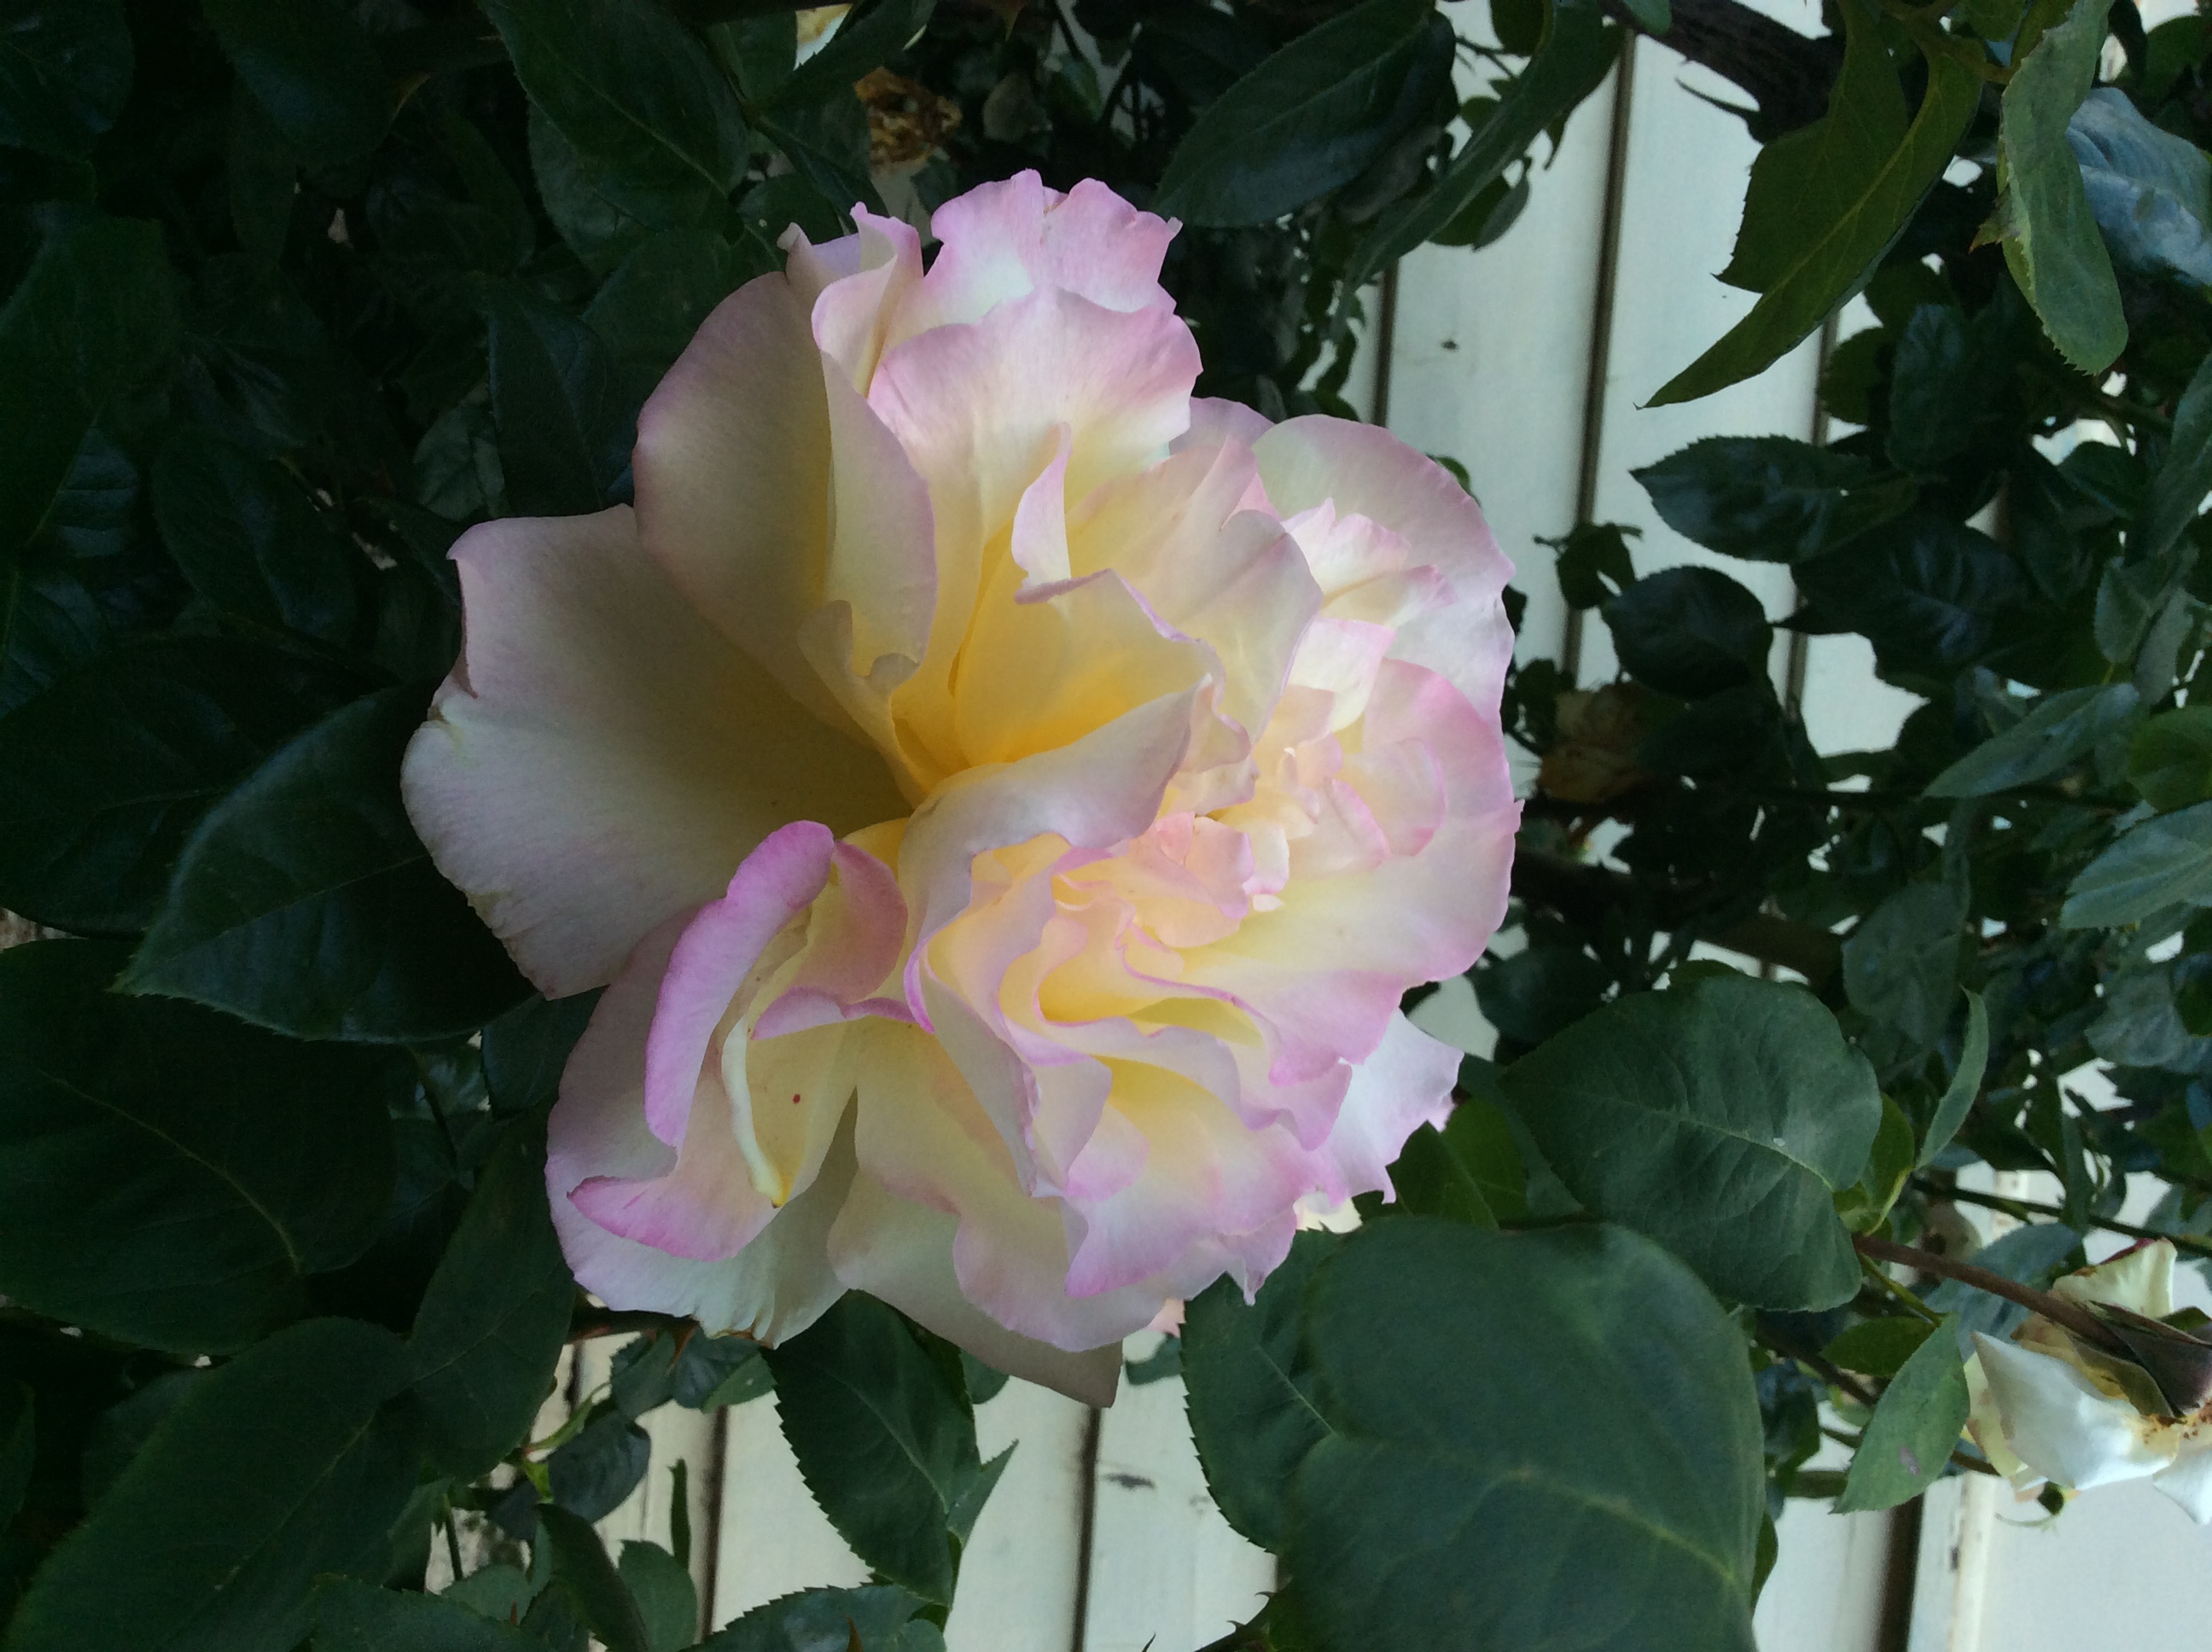 My photo a rose